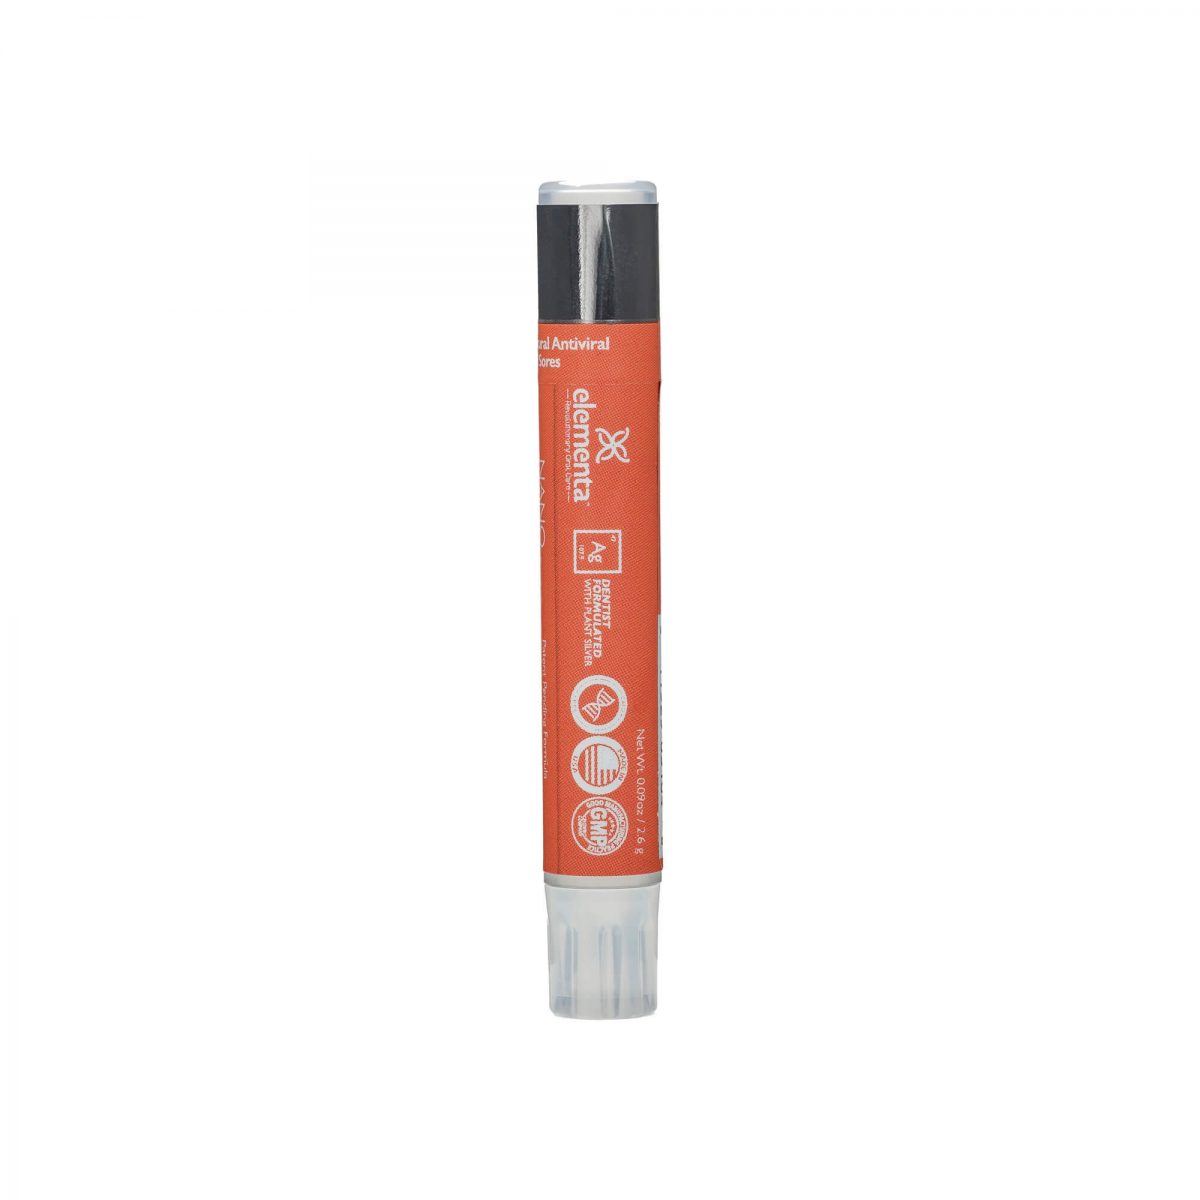 image of nano silver tropical orange flavored lip balm side of stick